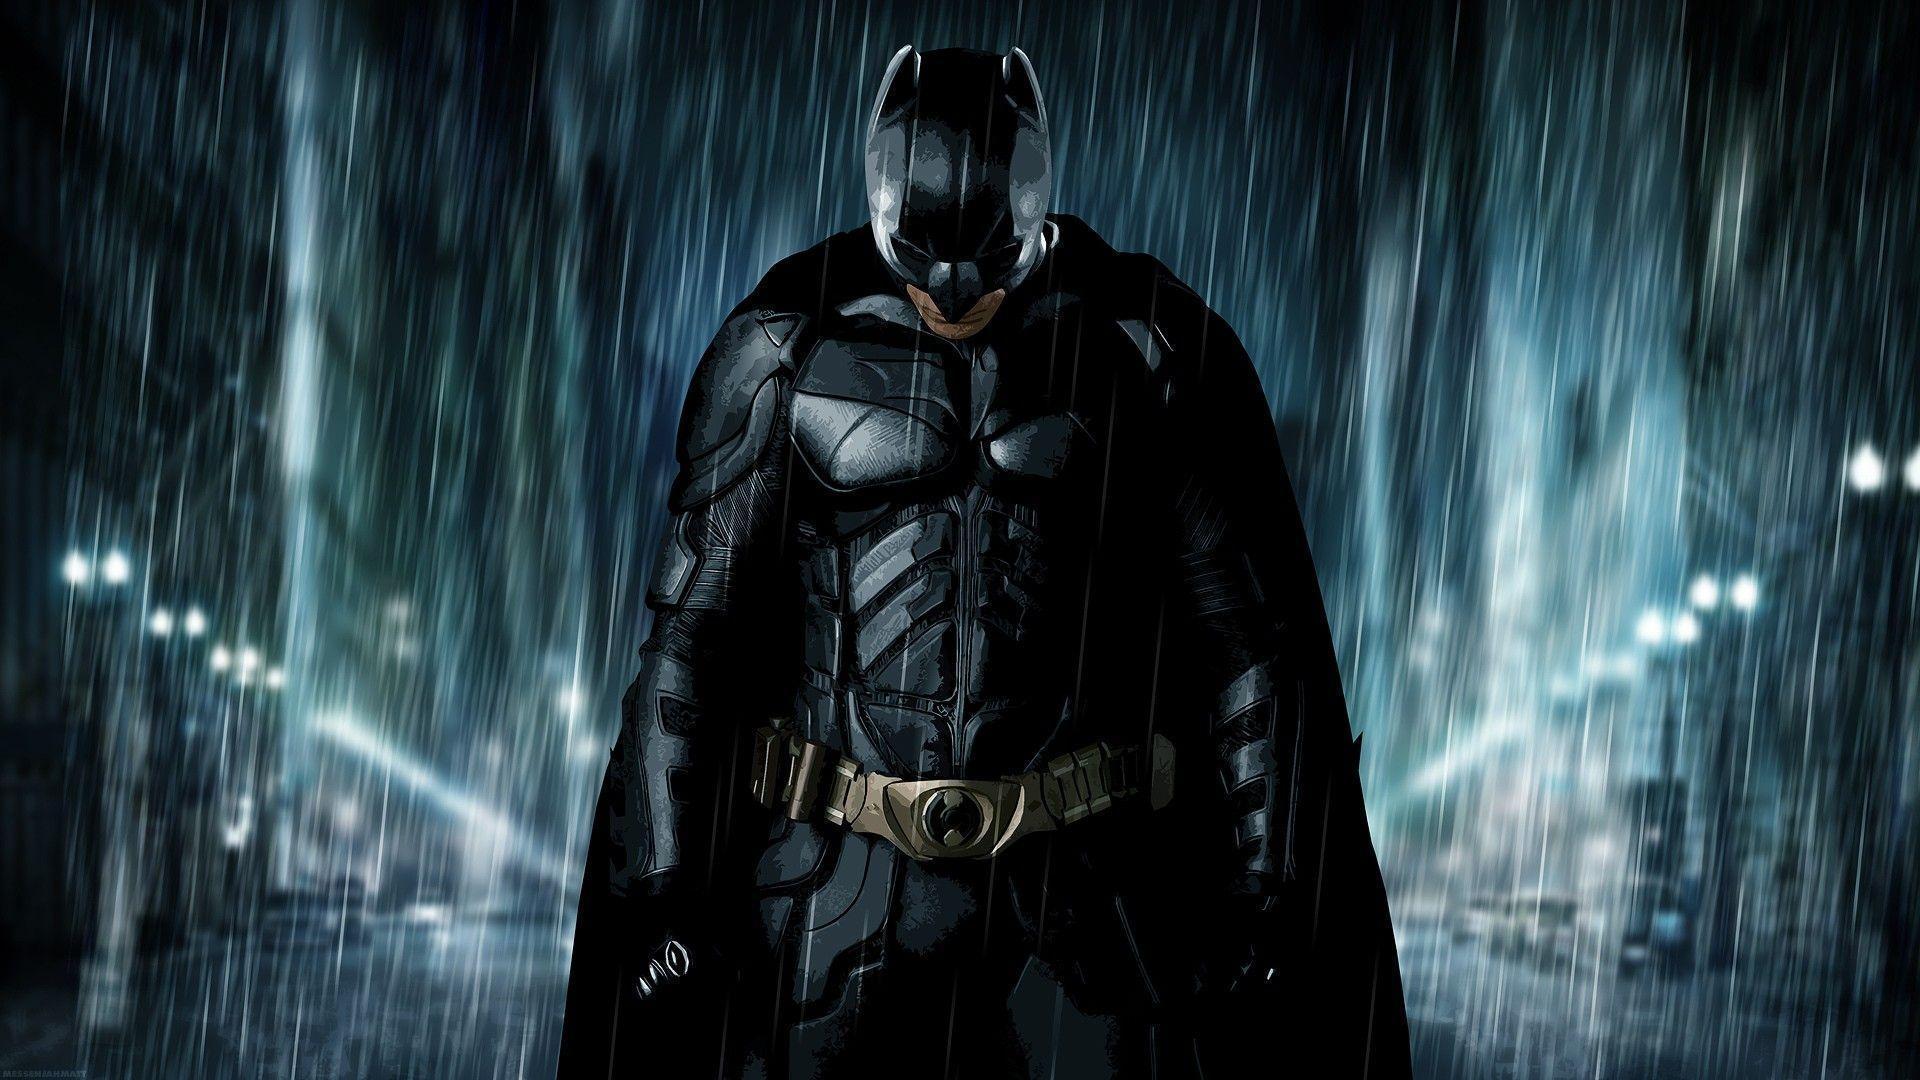 Batman the dark knight rises background HD wallpaper - Image